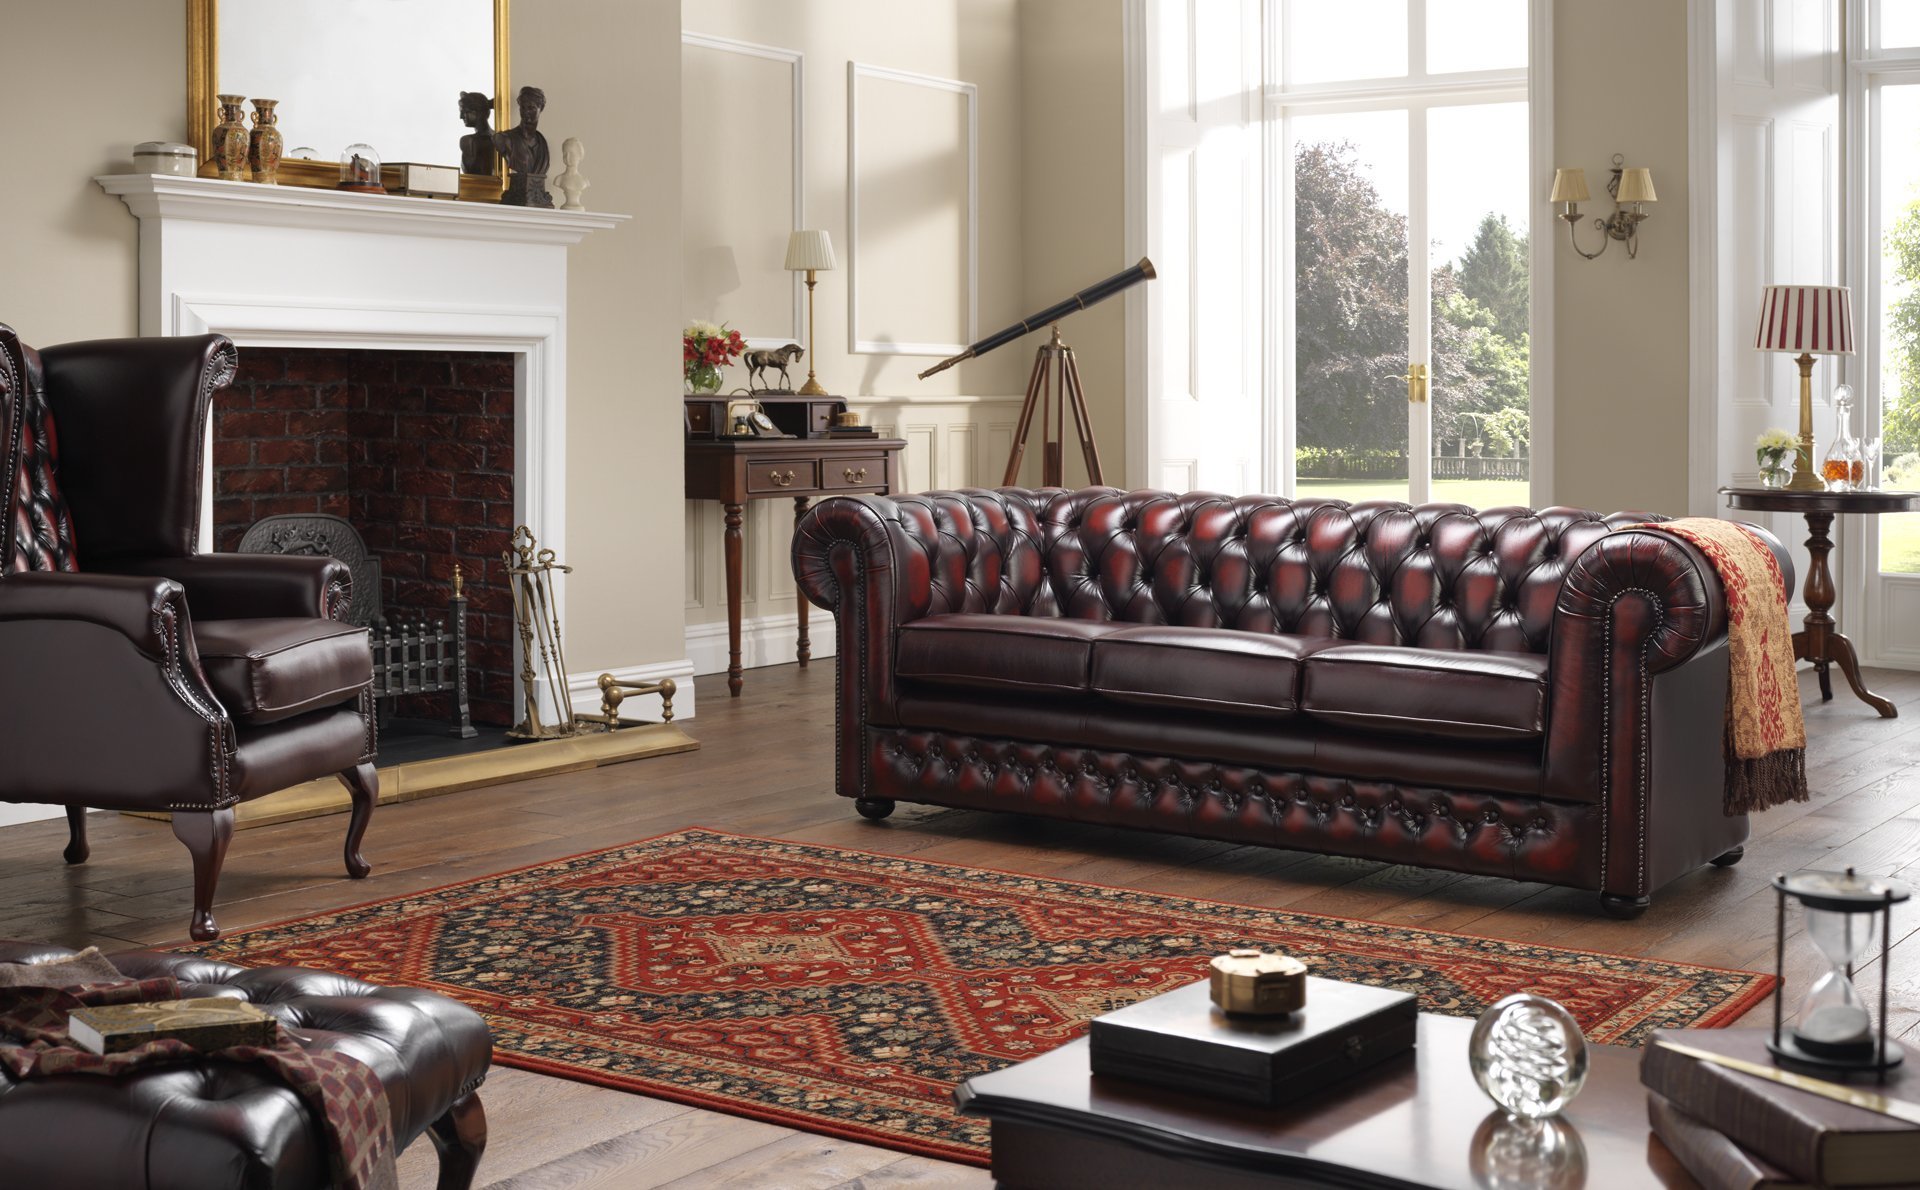 Living Room Ideas With Chesterfield Sofa - Photos